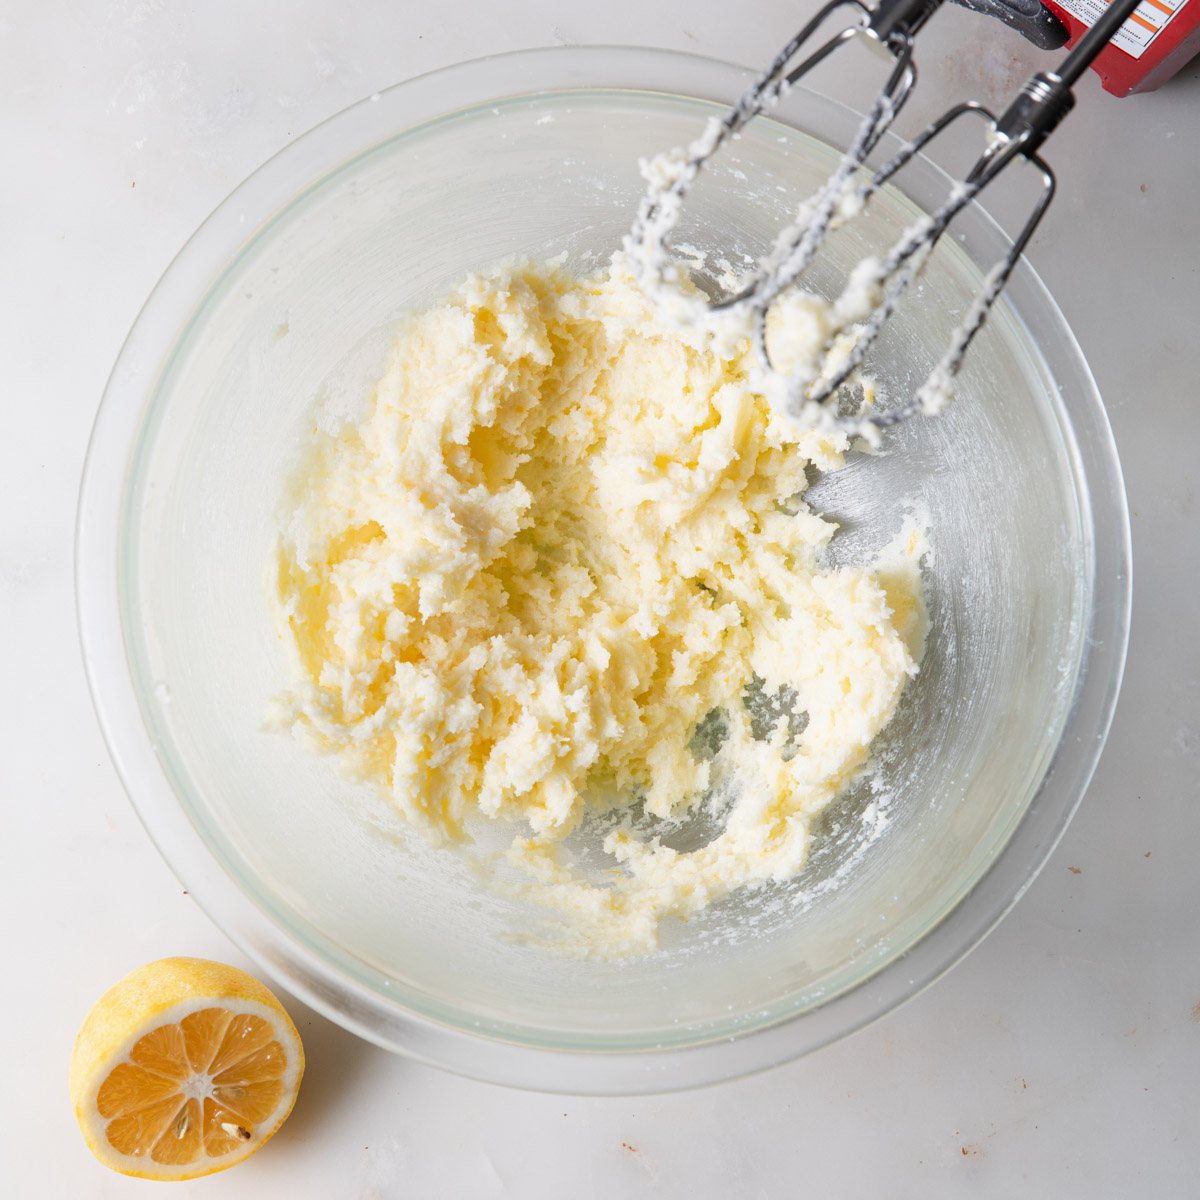 Creaming butter and sugar for the lemon loaf batter